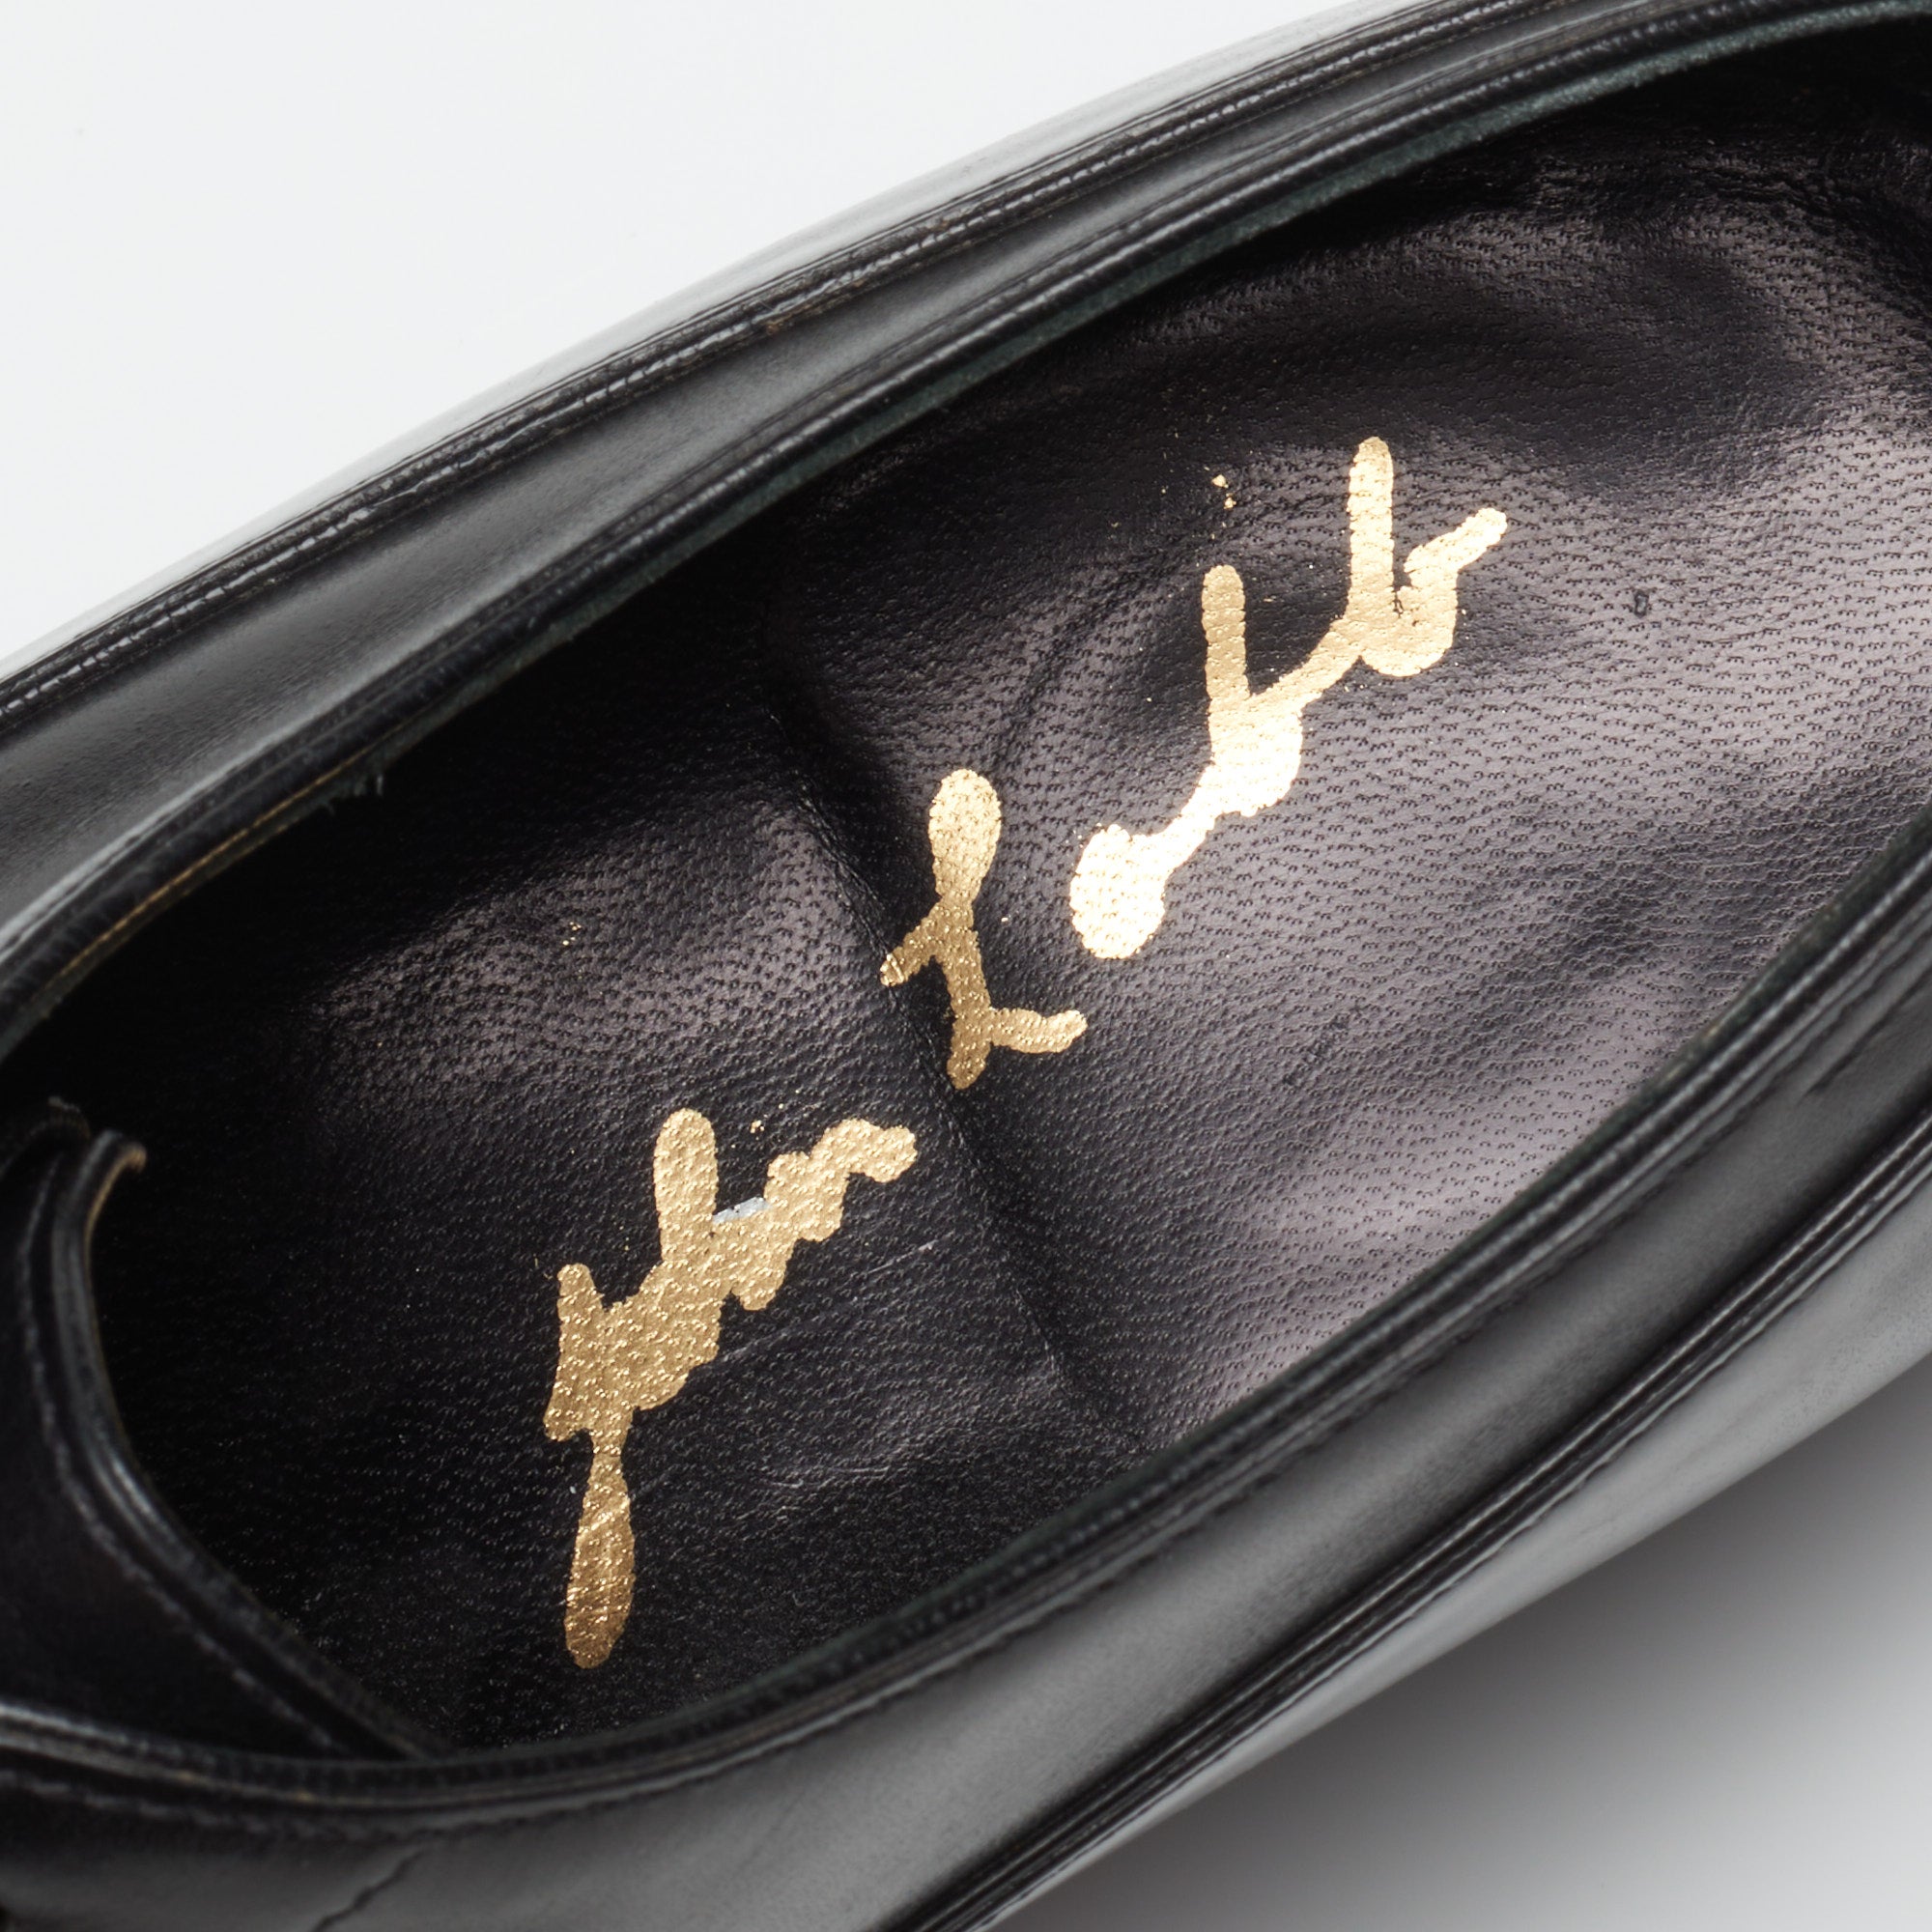 JOHN LOBB Paris Bespoke Black Calf Leather Balmoral Oxford Shoes UK 7. –  SARTORIALE